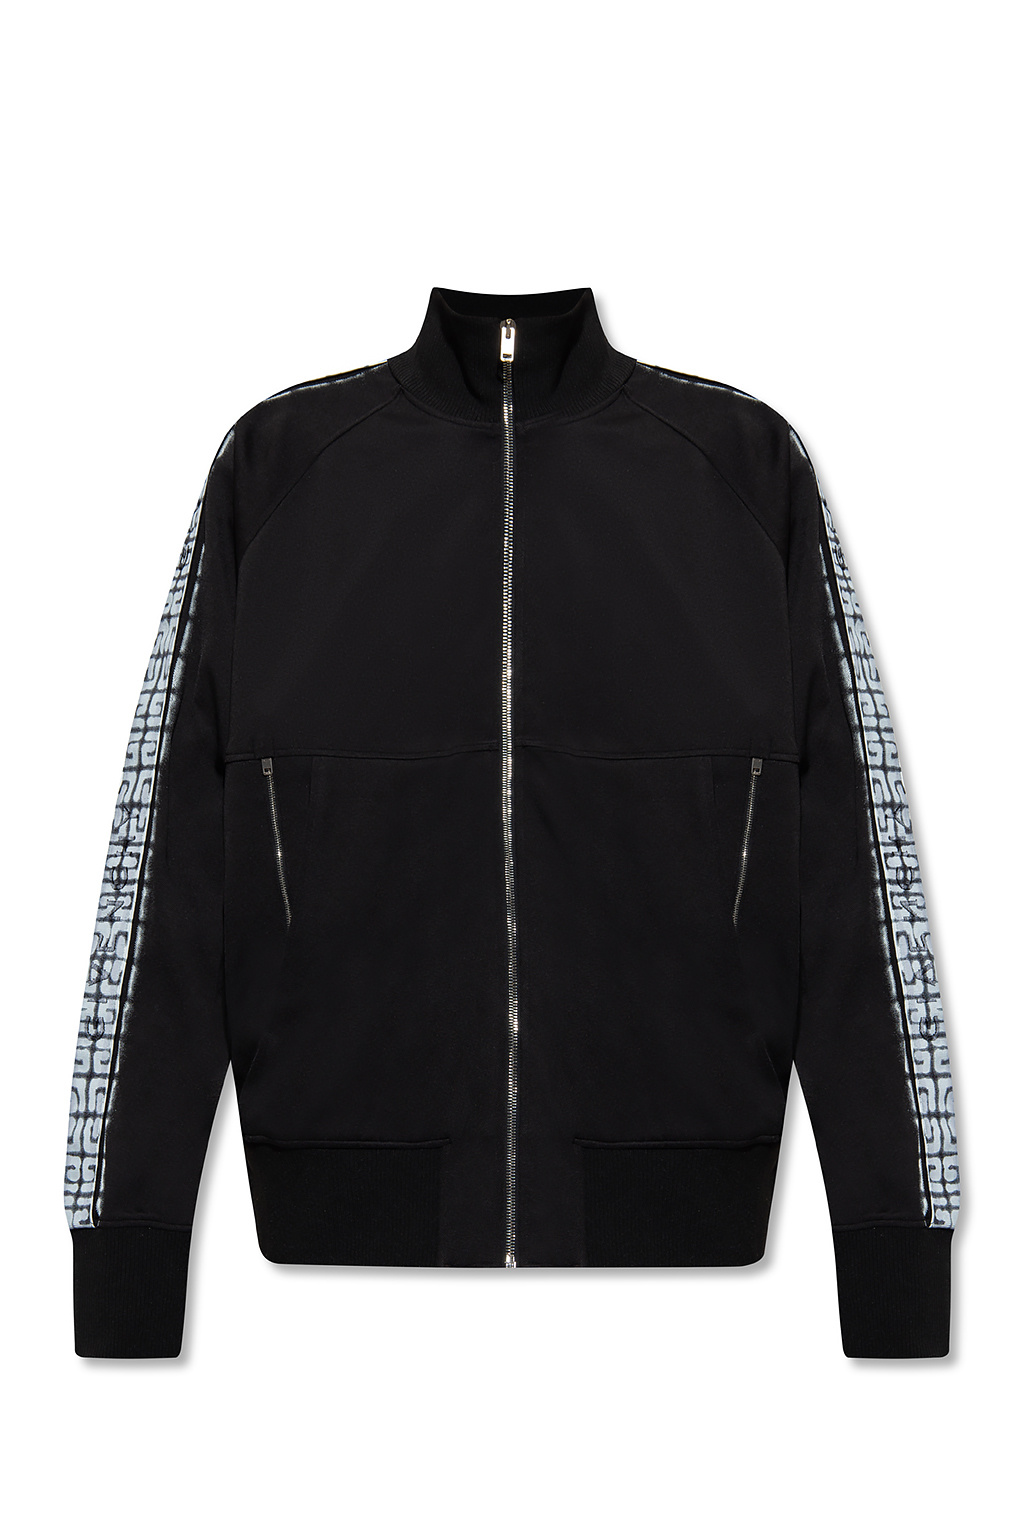 Givenchy Givenchy 4G jacquard denim jacket